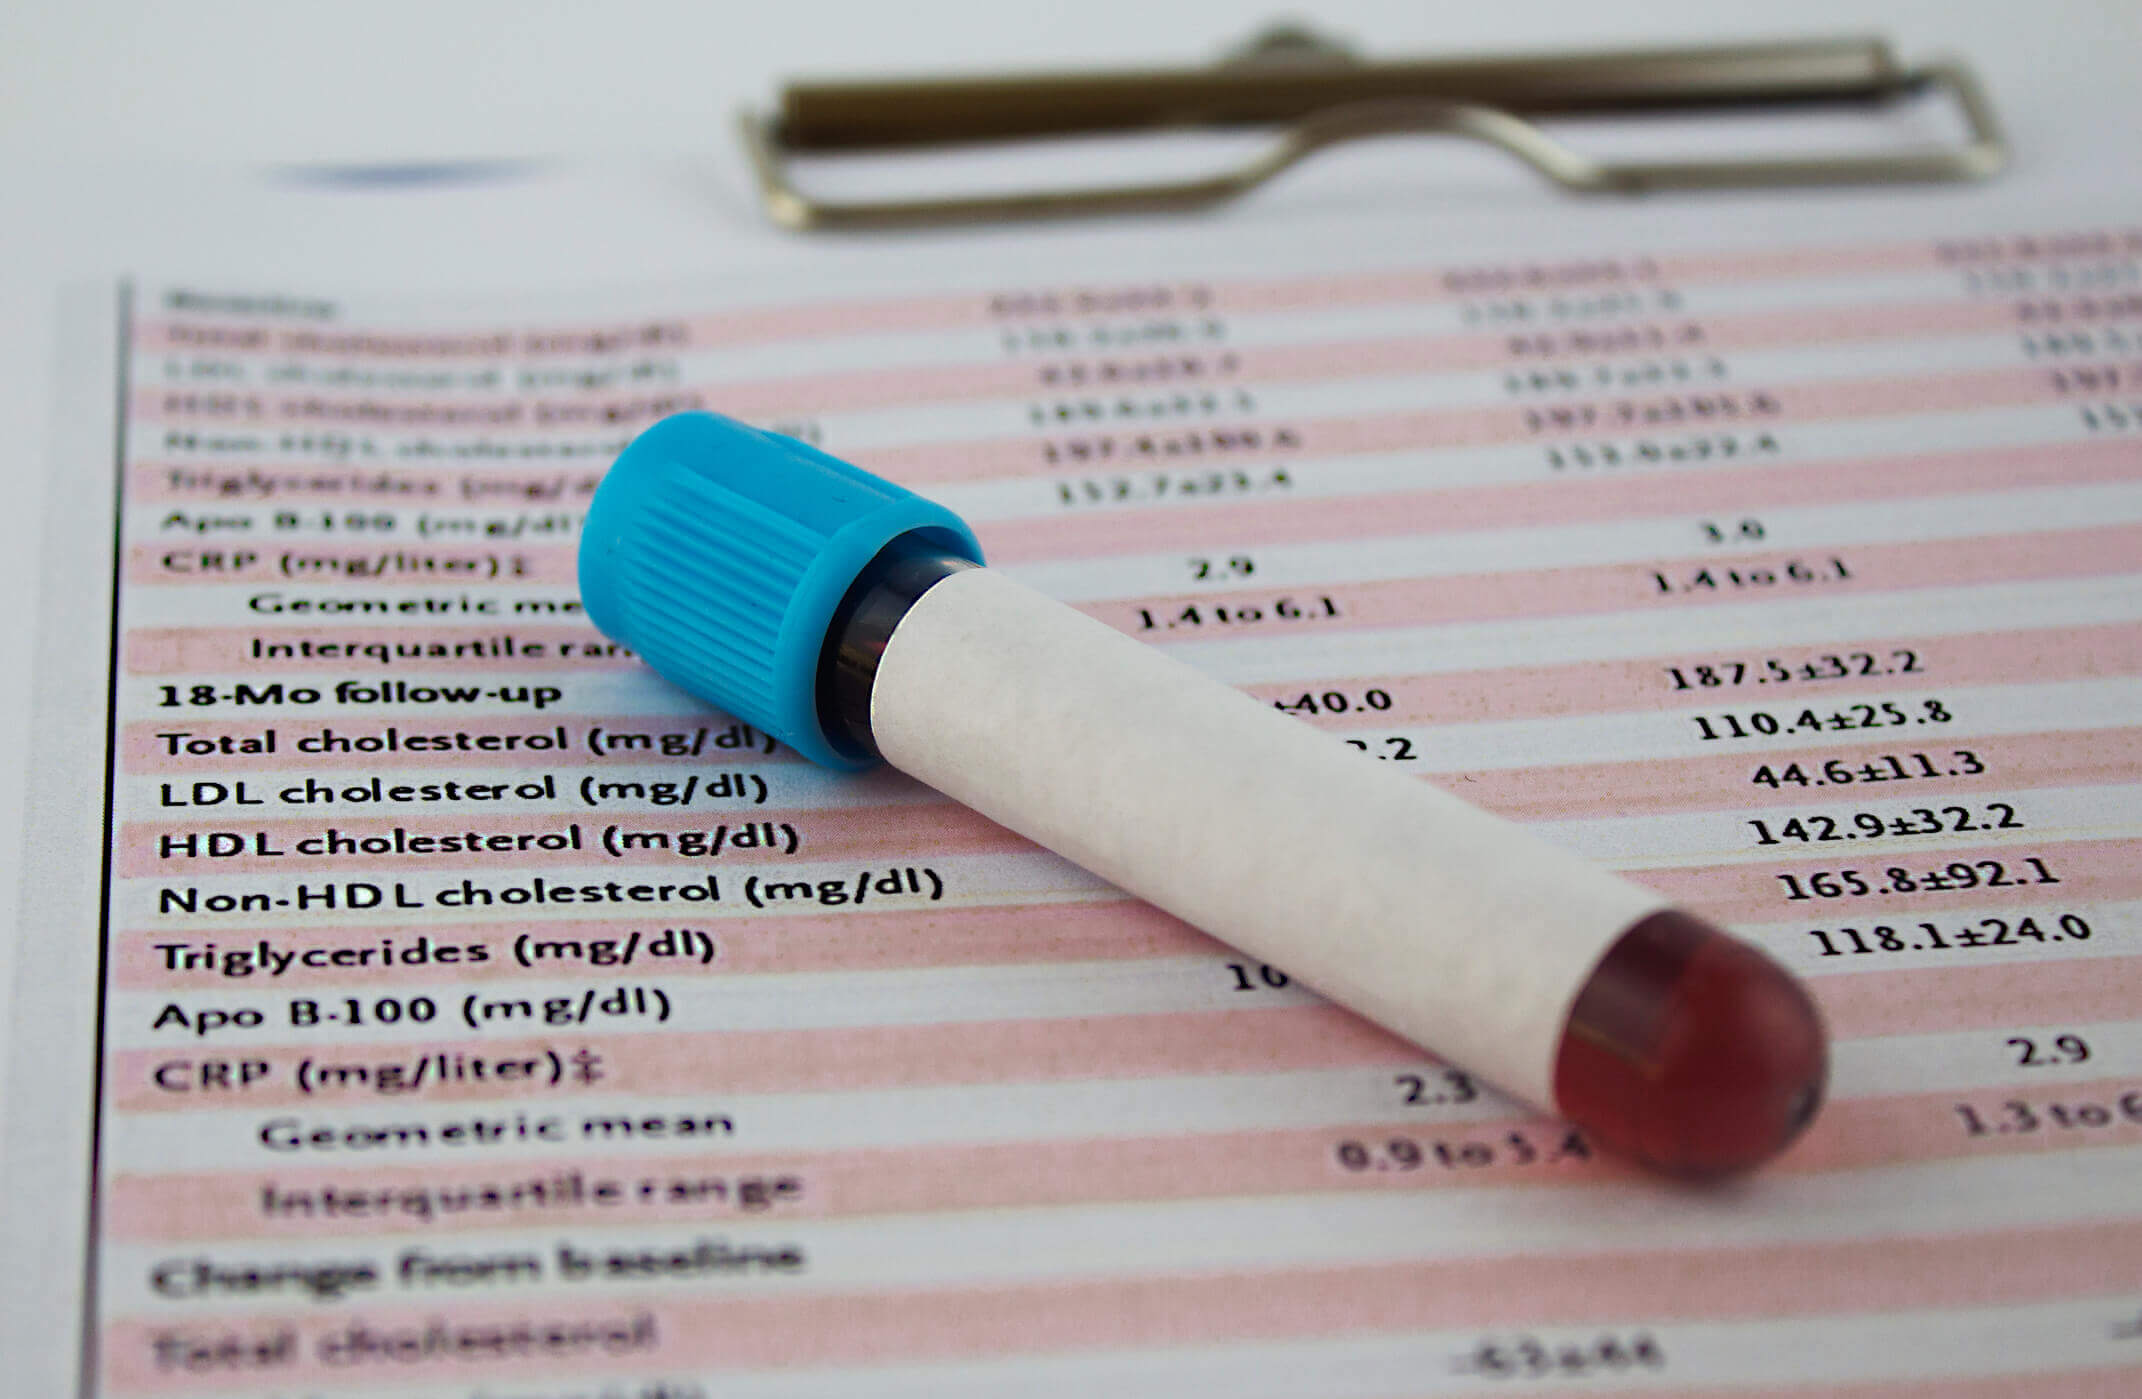 blood sample collector for testing cholestrol levels